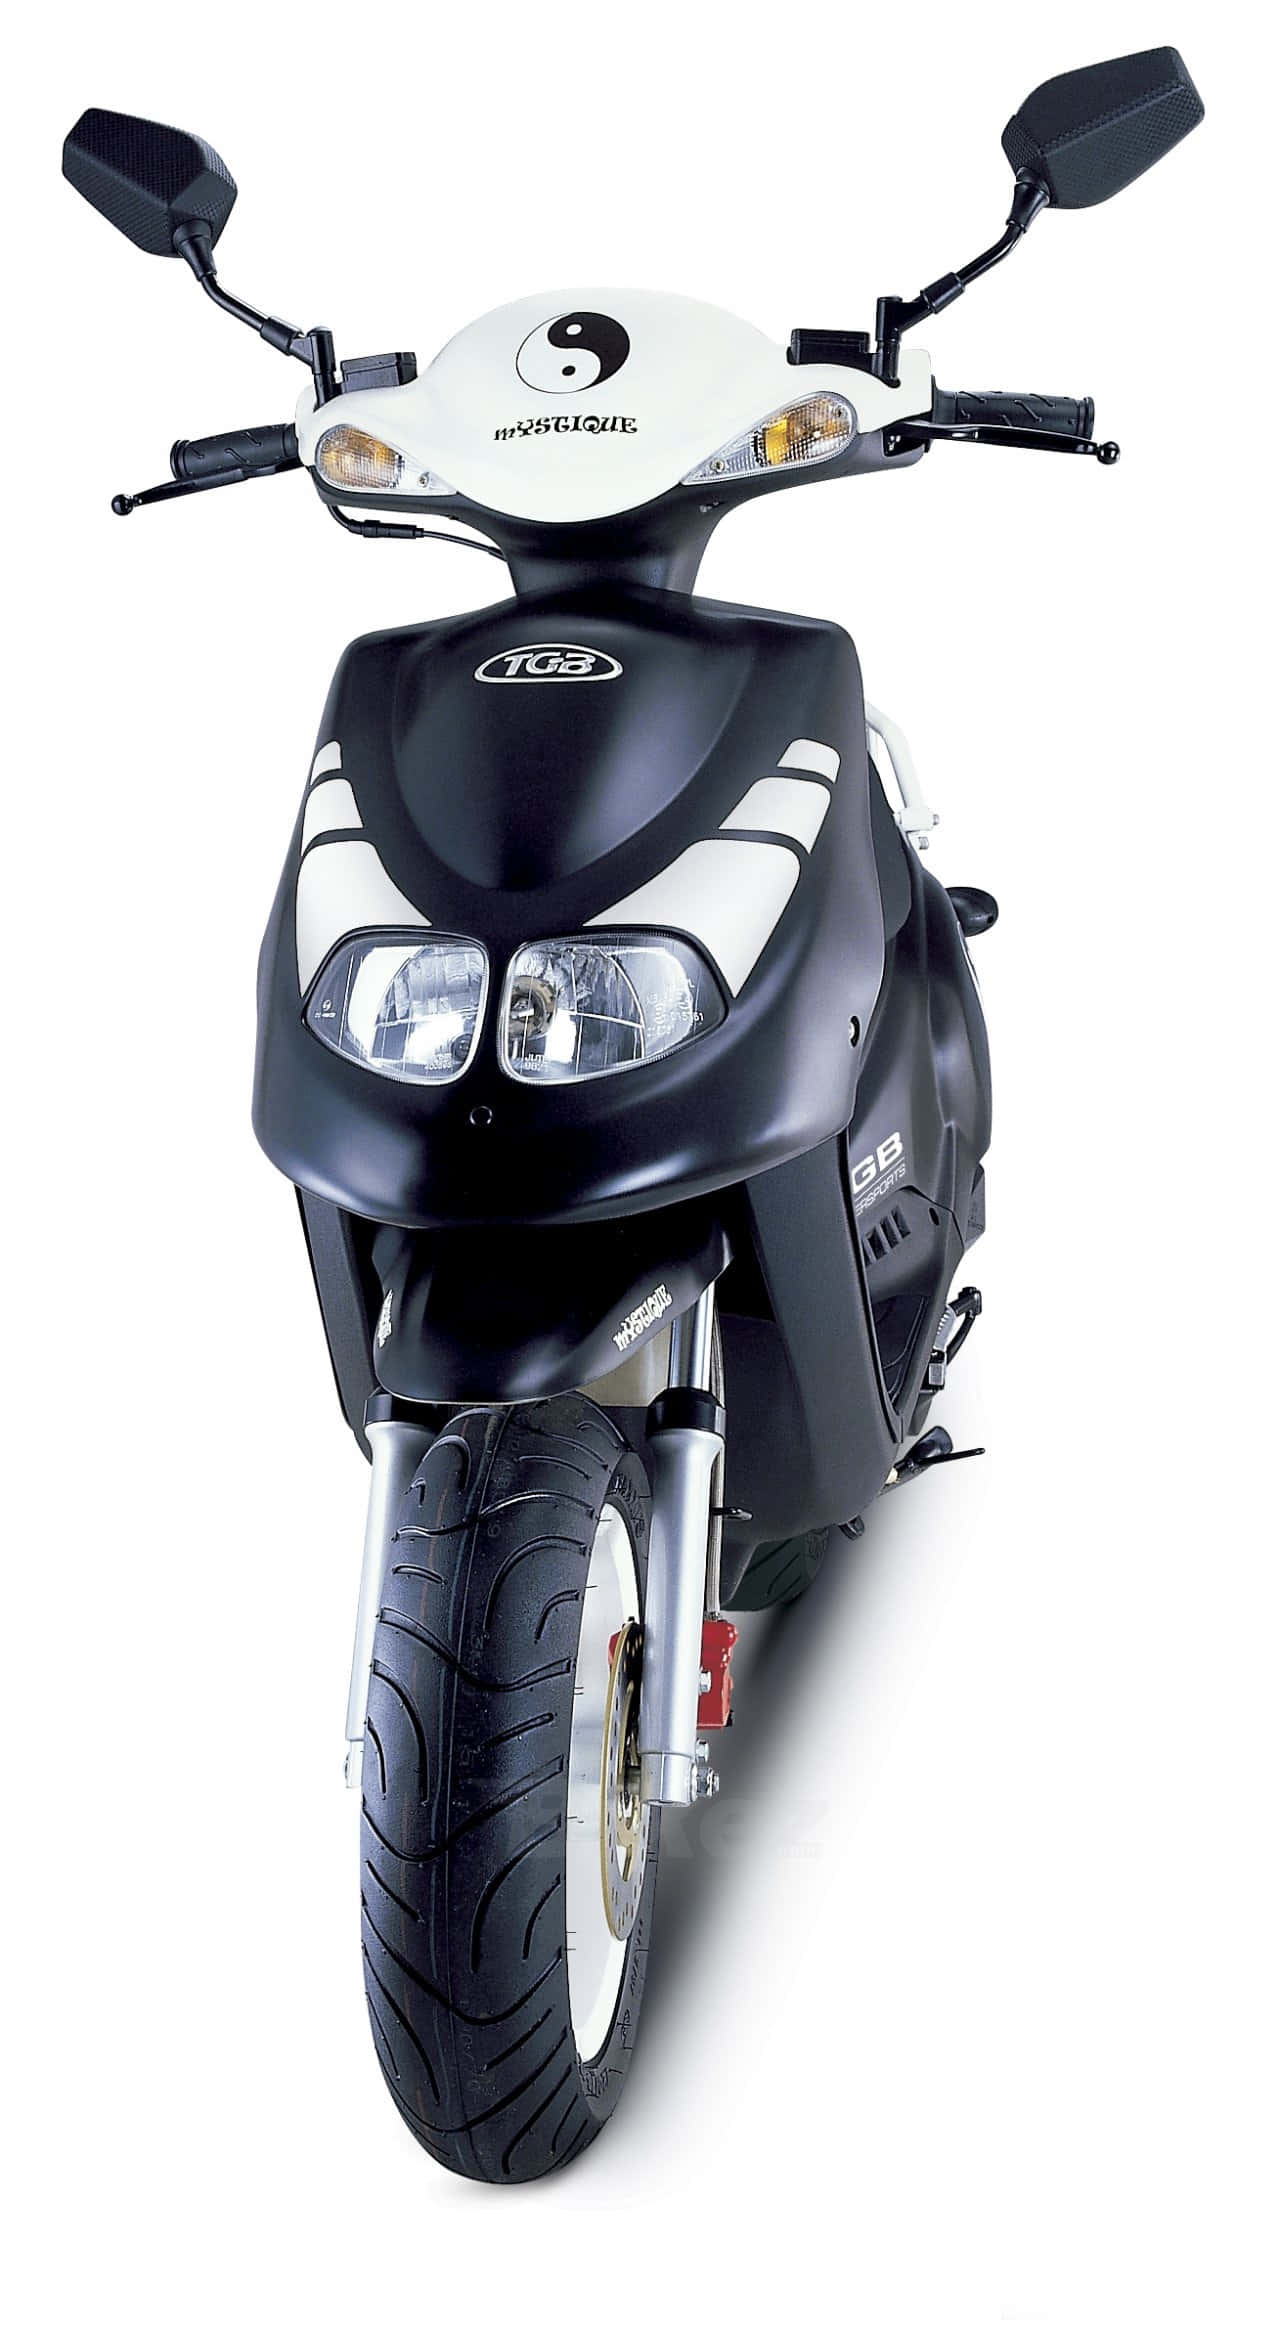 "sleek Tgb Motorcycle In Pristine Condition" Wallpaper